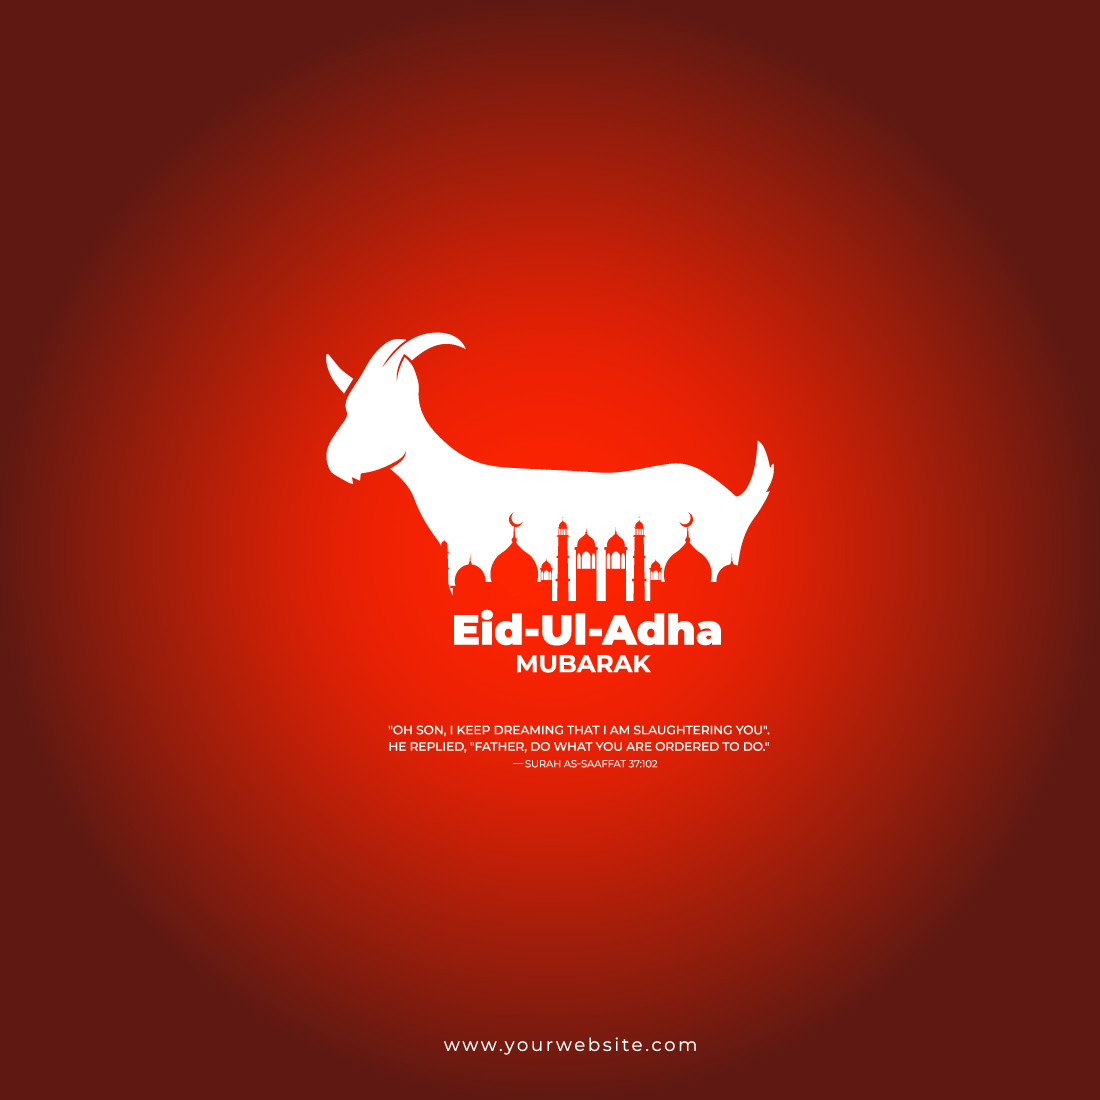 Eid Ul adha festival Animal sacrifice background post design preview image.